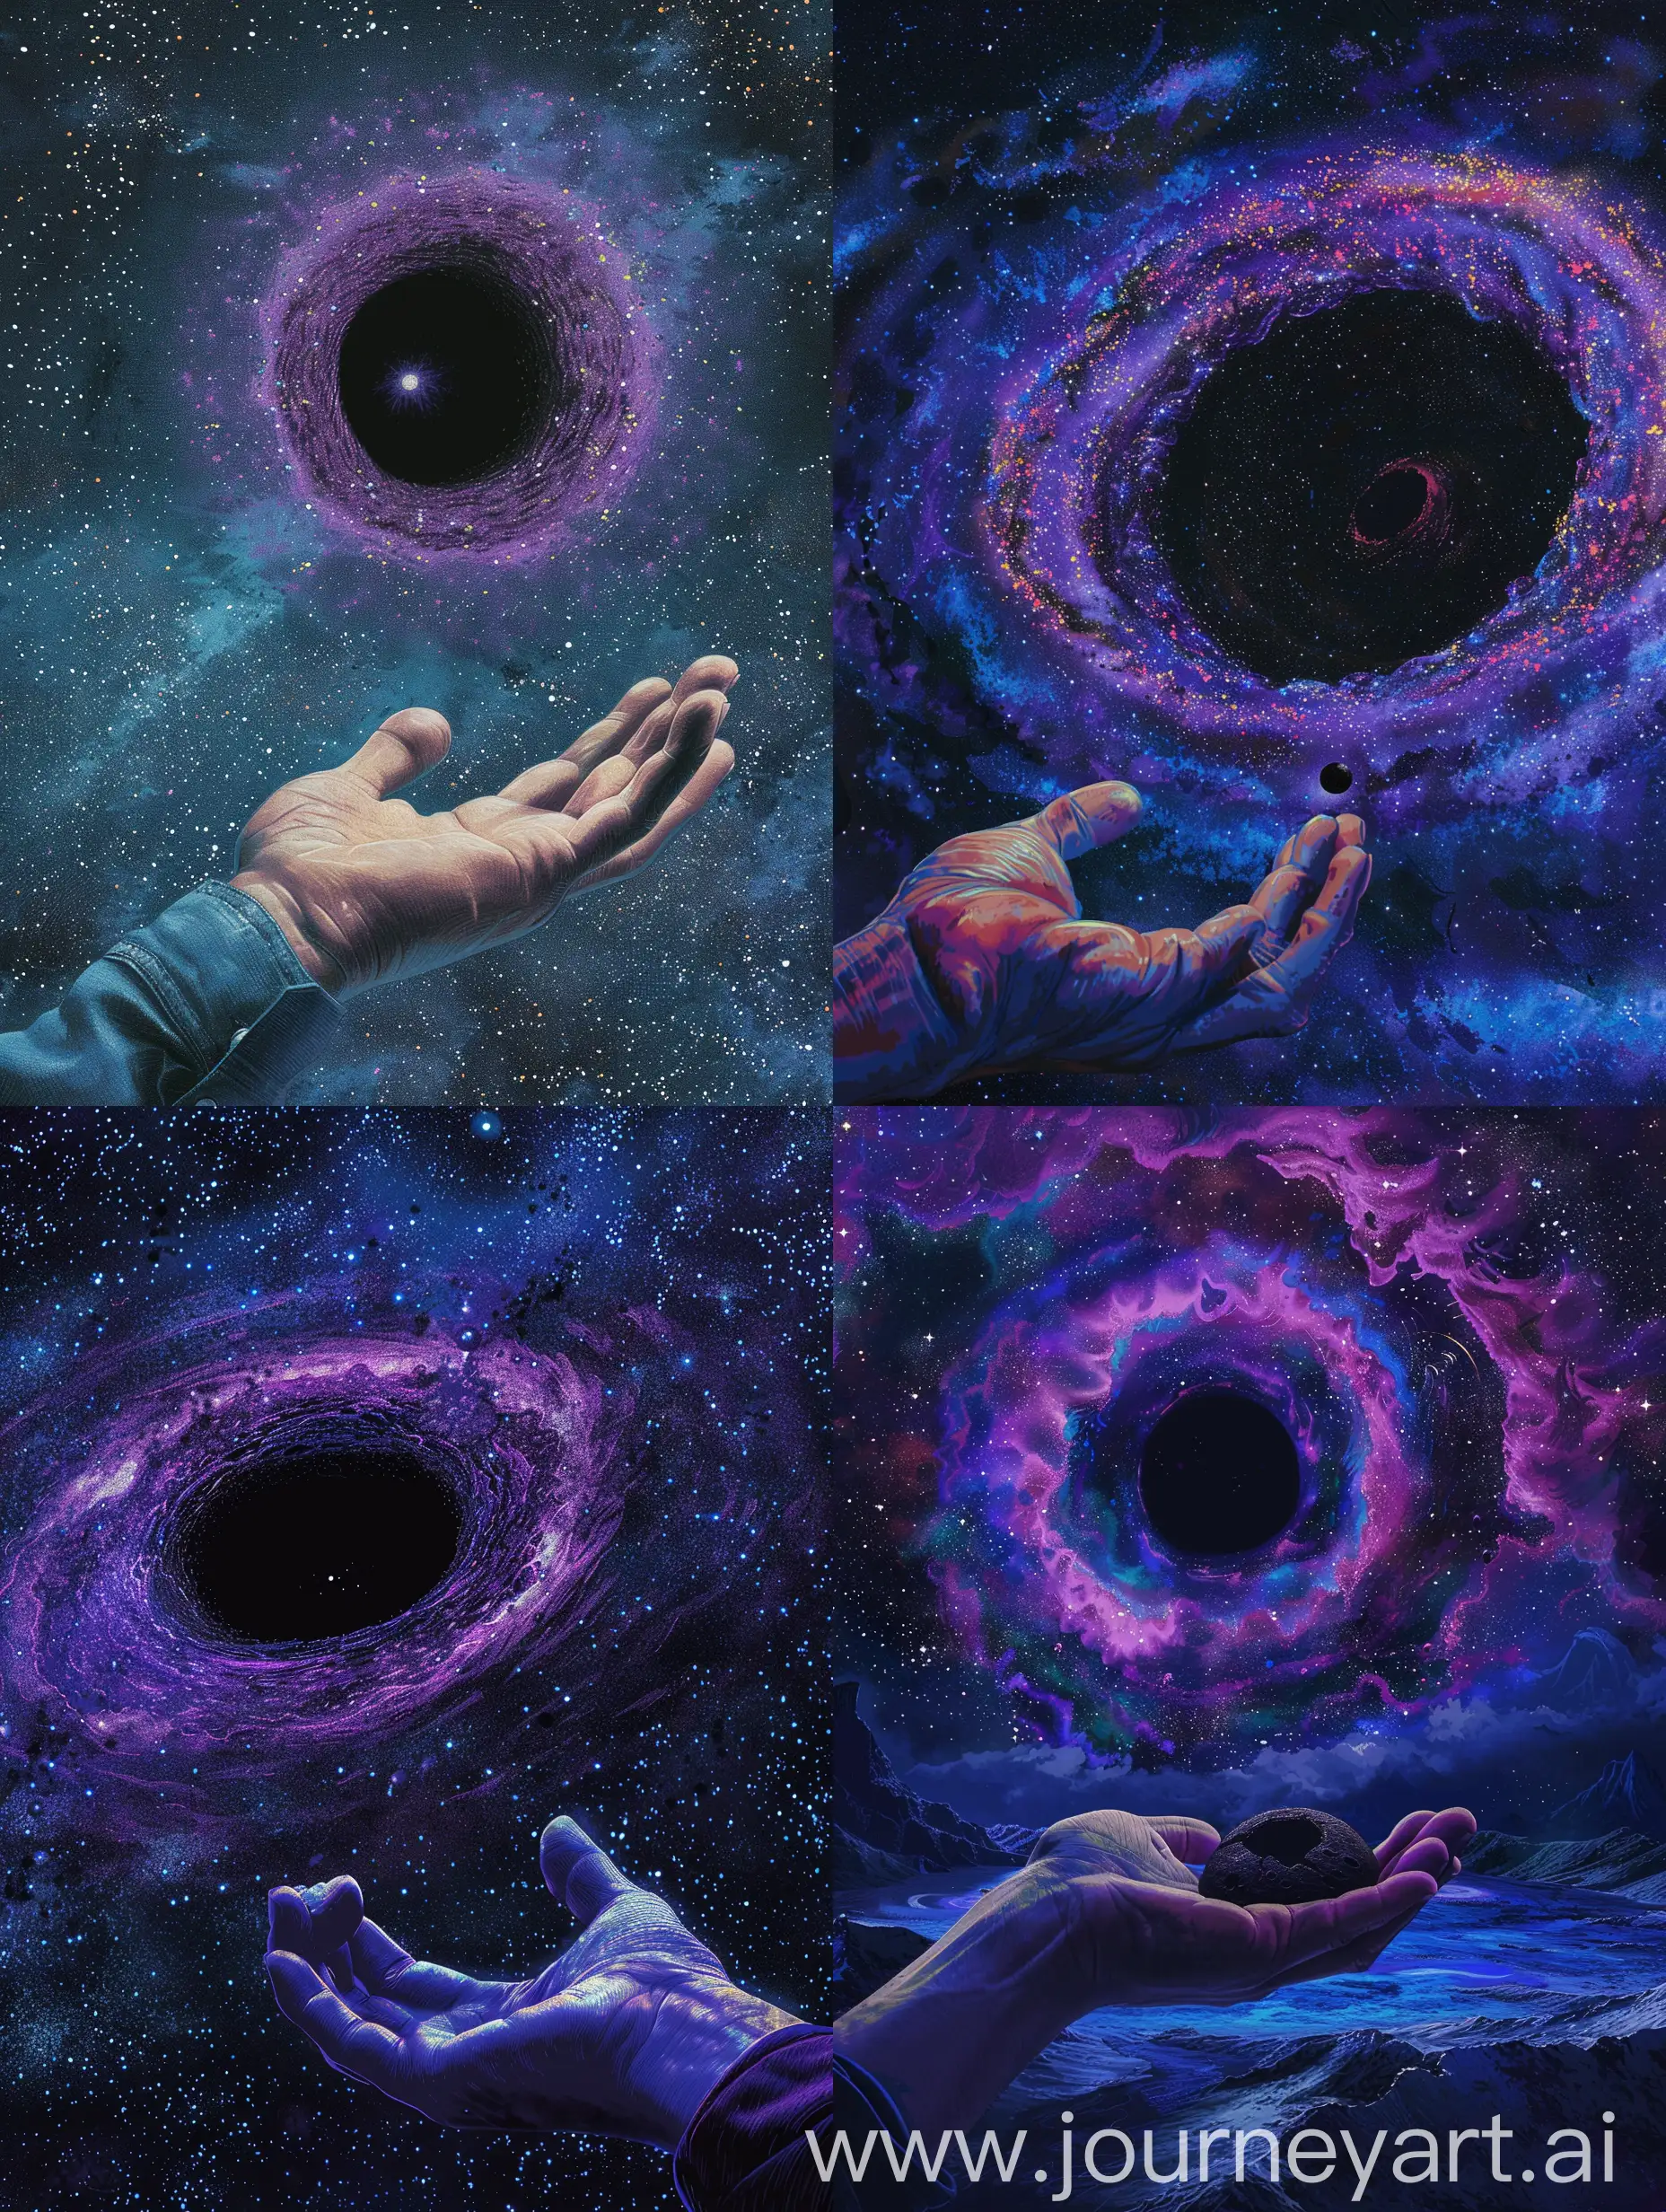 Enormous-Purple-Black-Hole-Held-in-Hand-in-Cosmic-Expanse